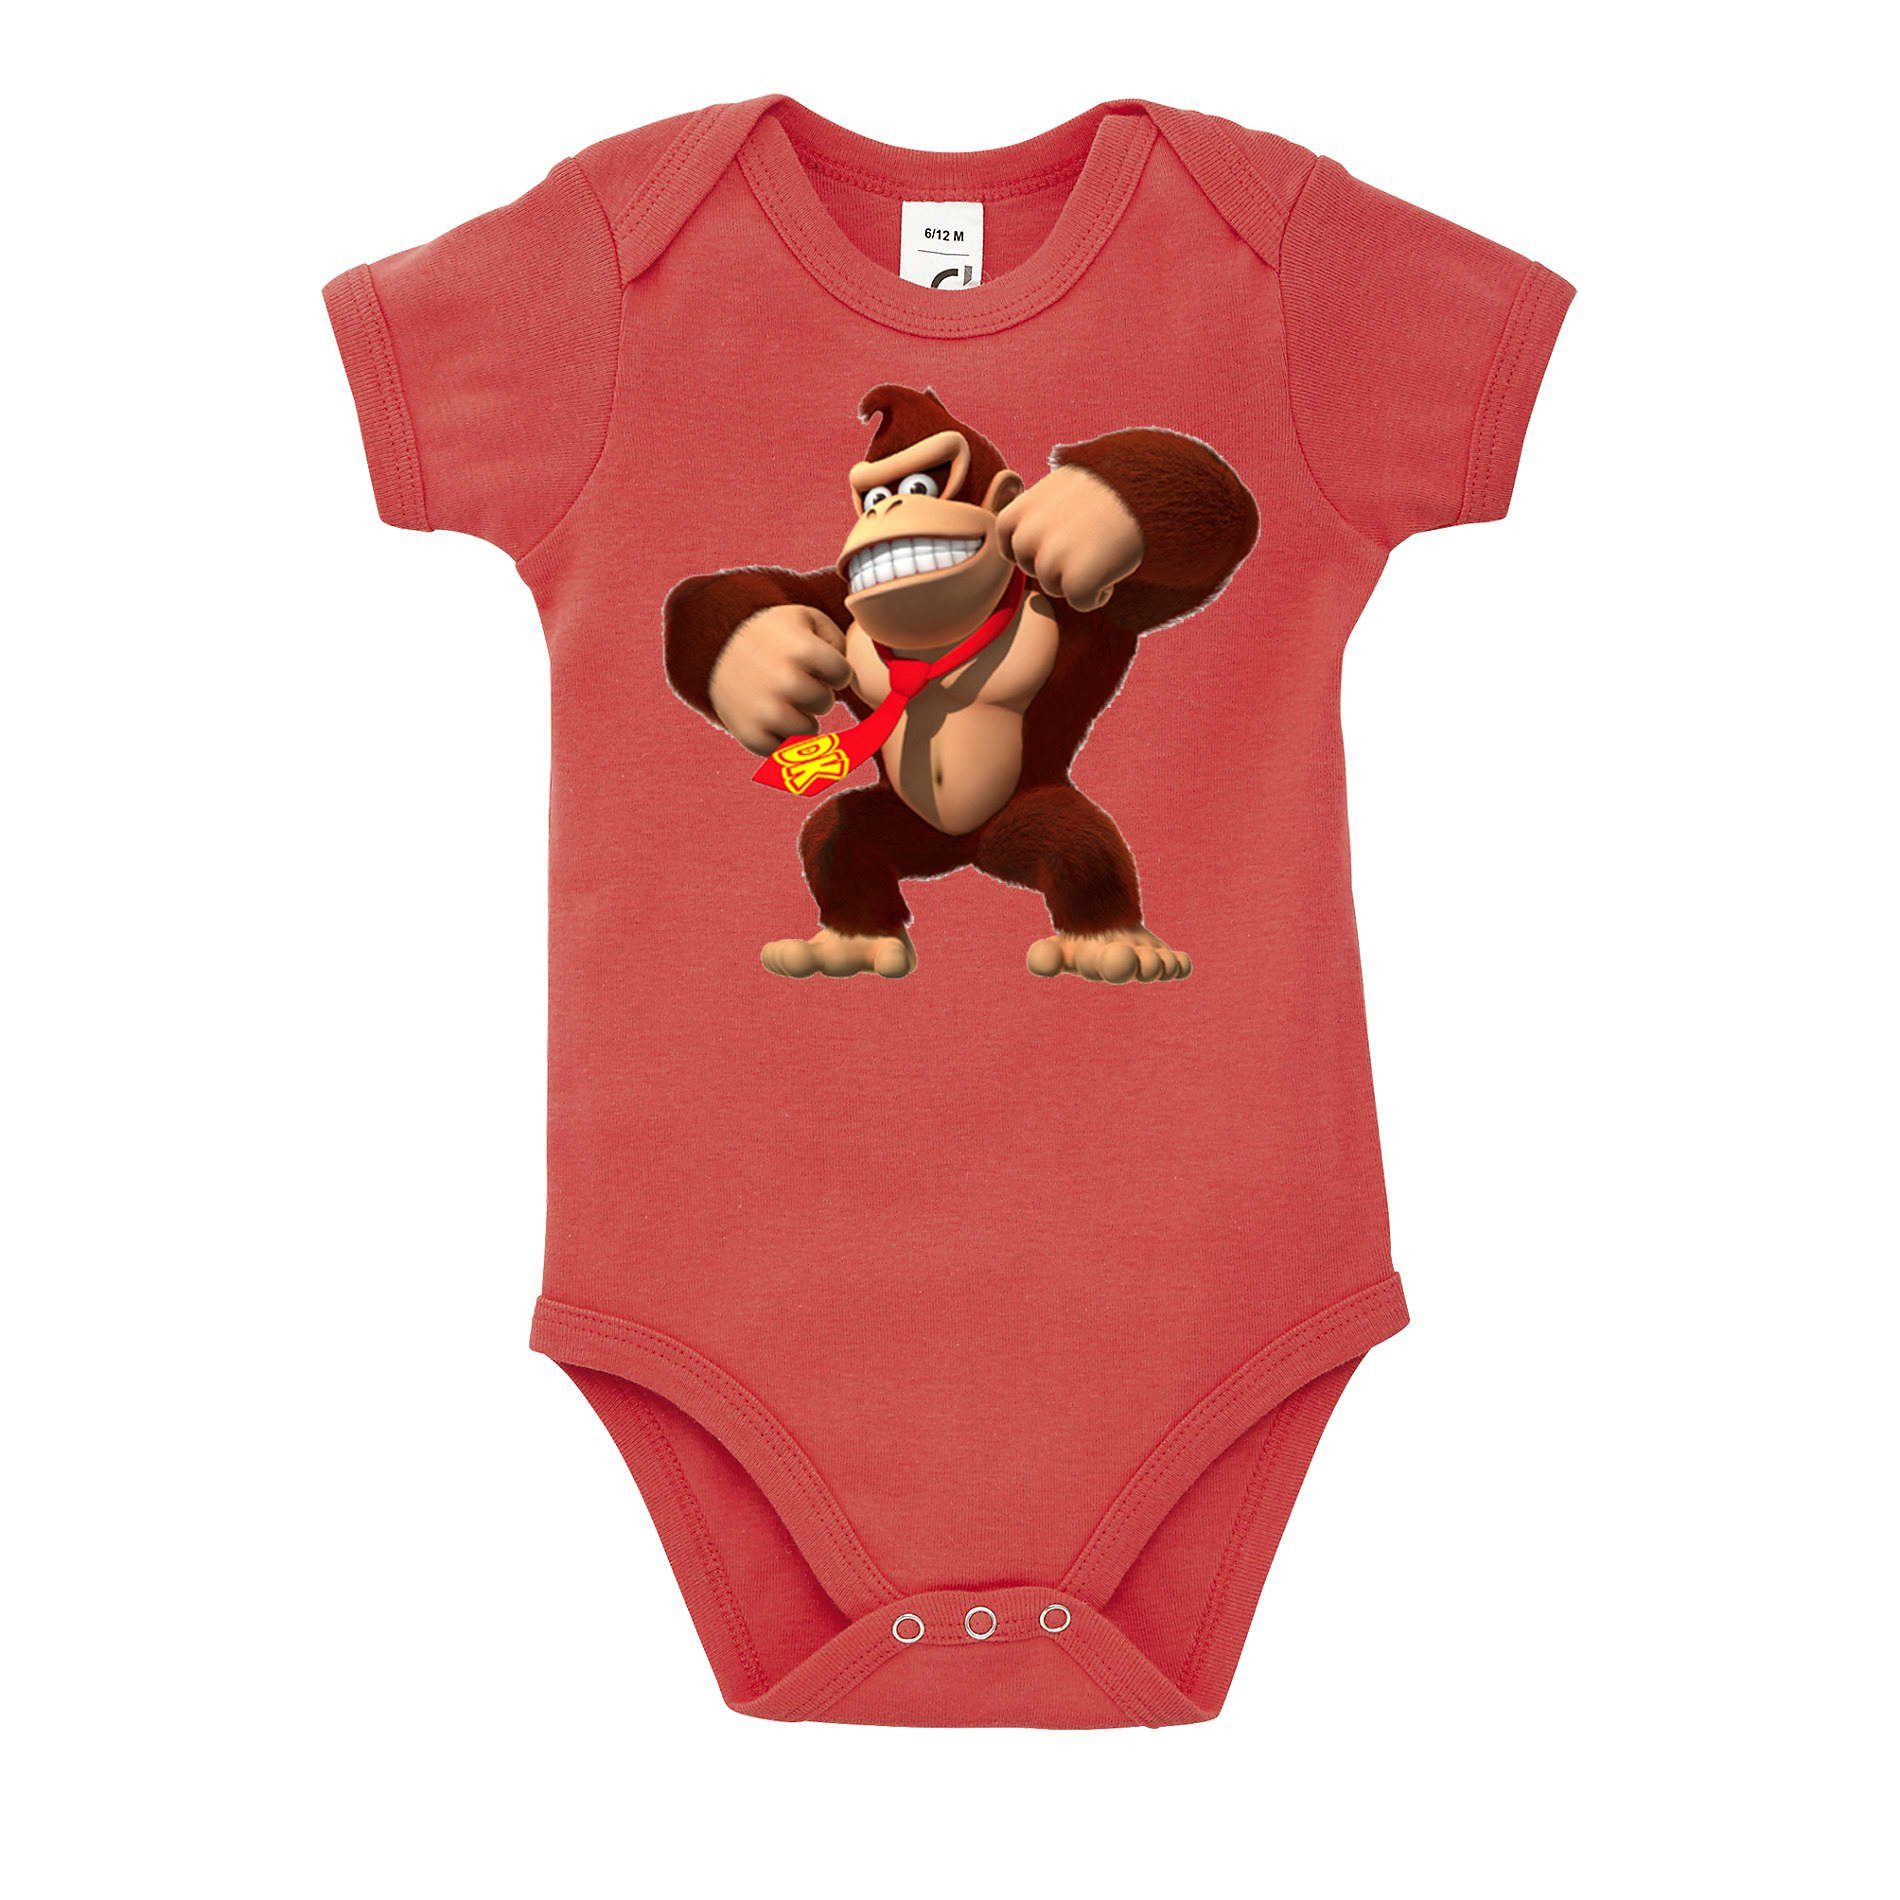 Blondie & Brownie Rot Strampler Affe Kong Gorilla mit Druckknopf Nintendo Kinder Baby Donkey